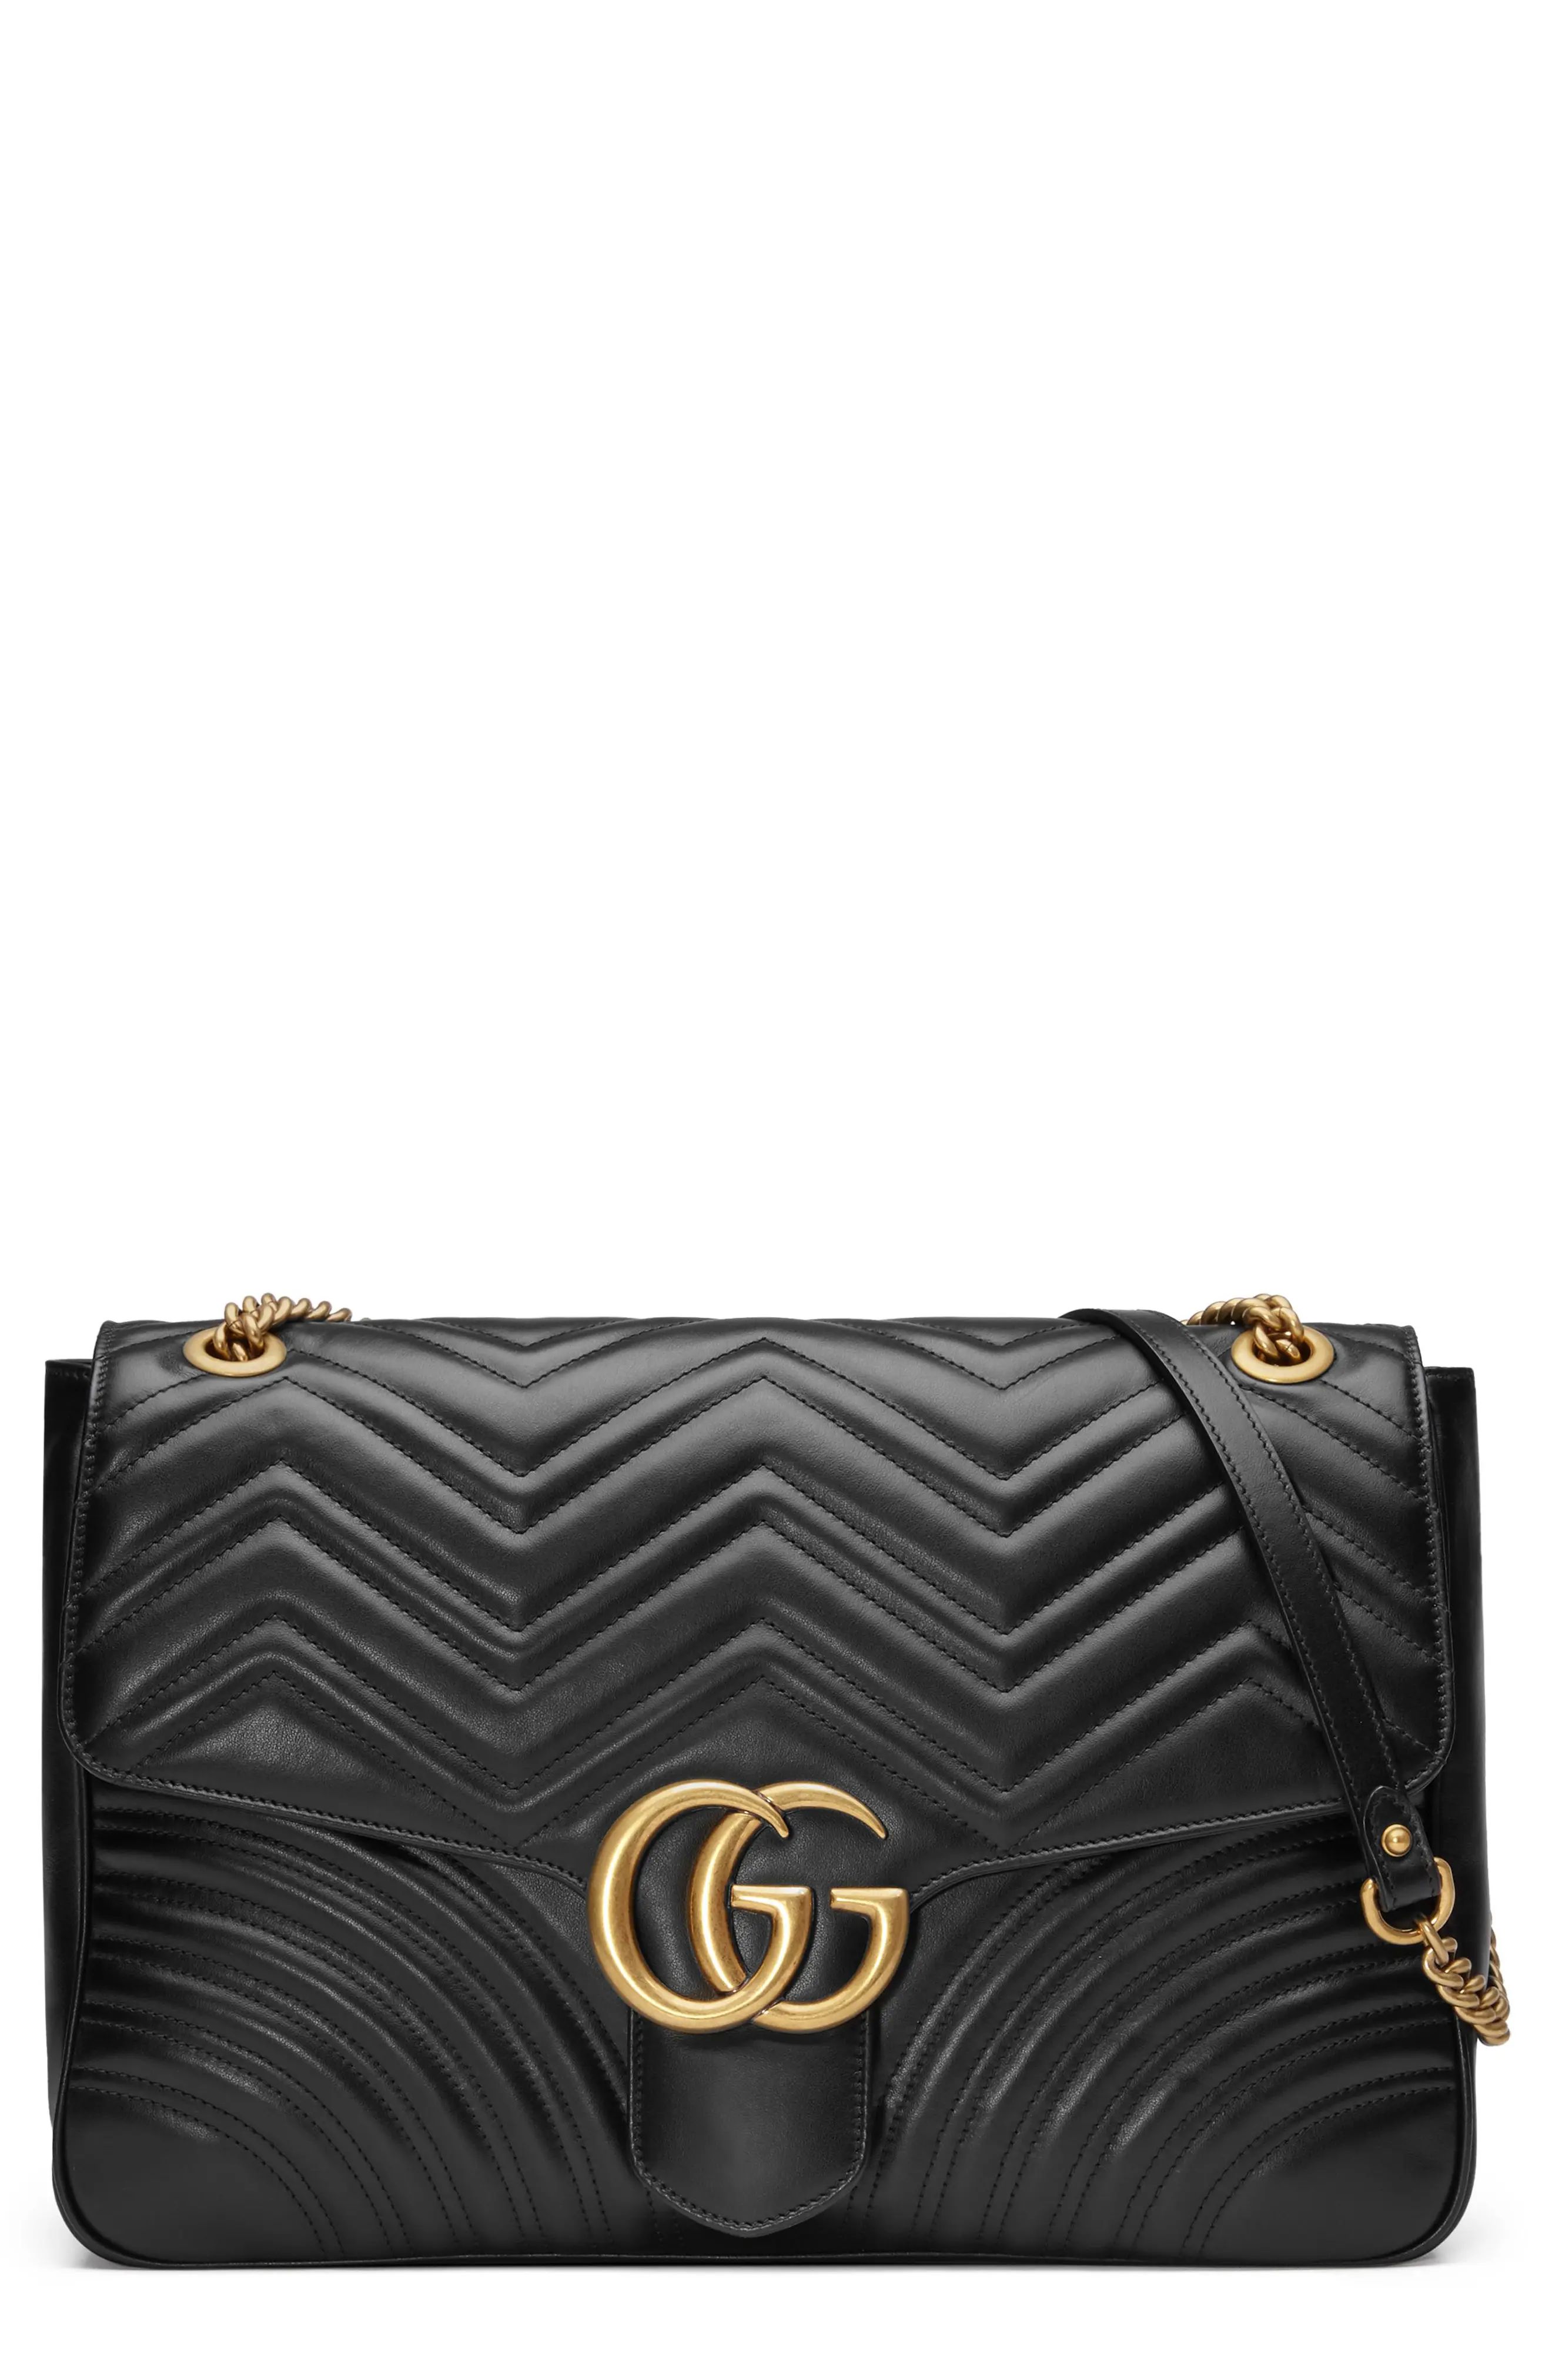 Gucci GG Large Marmont 2.0 Matelassé Leather Shoulder Bag | Nordstrom